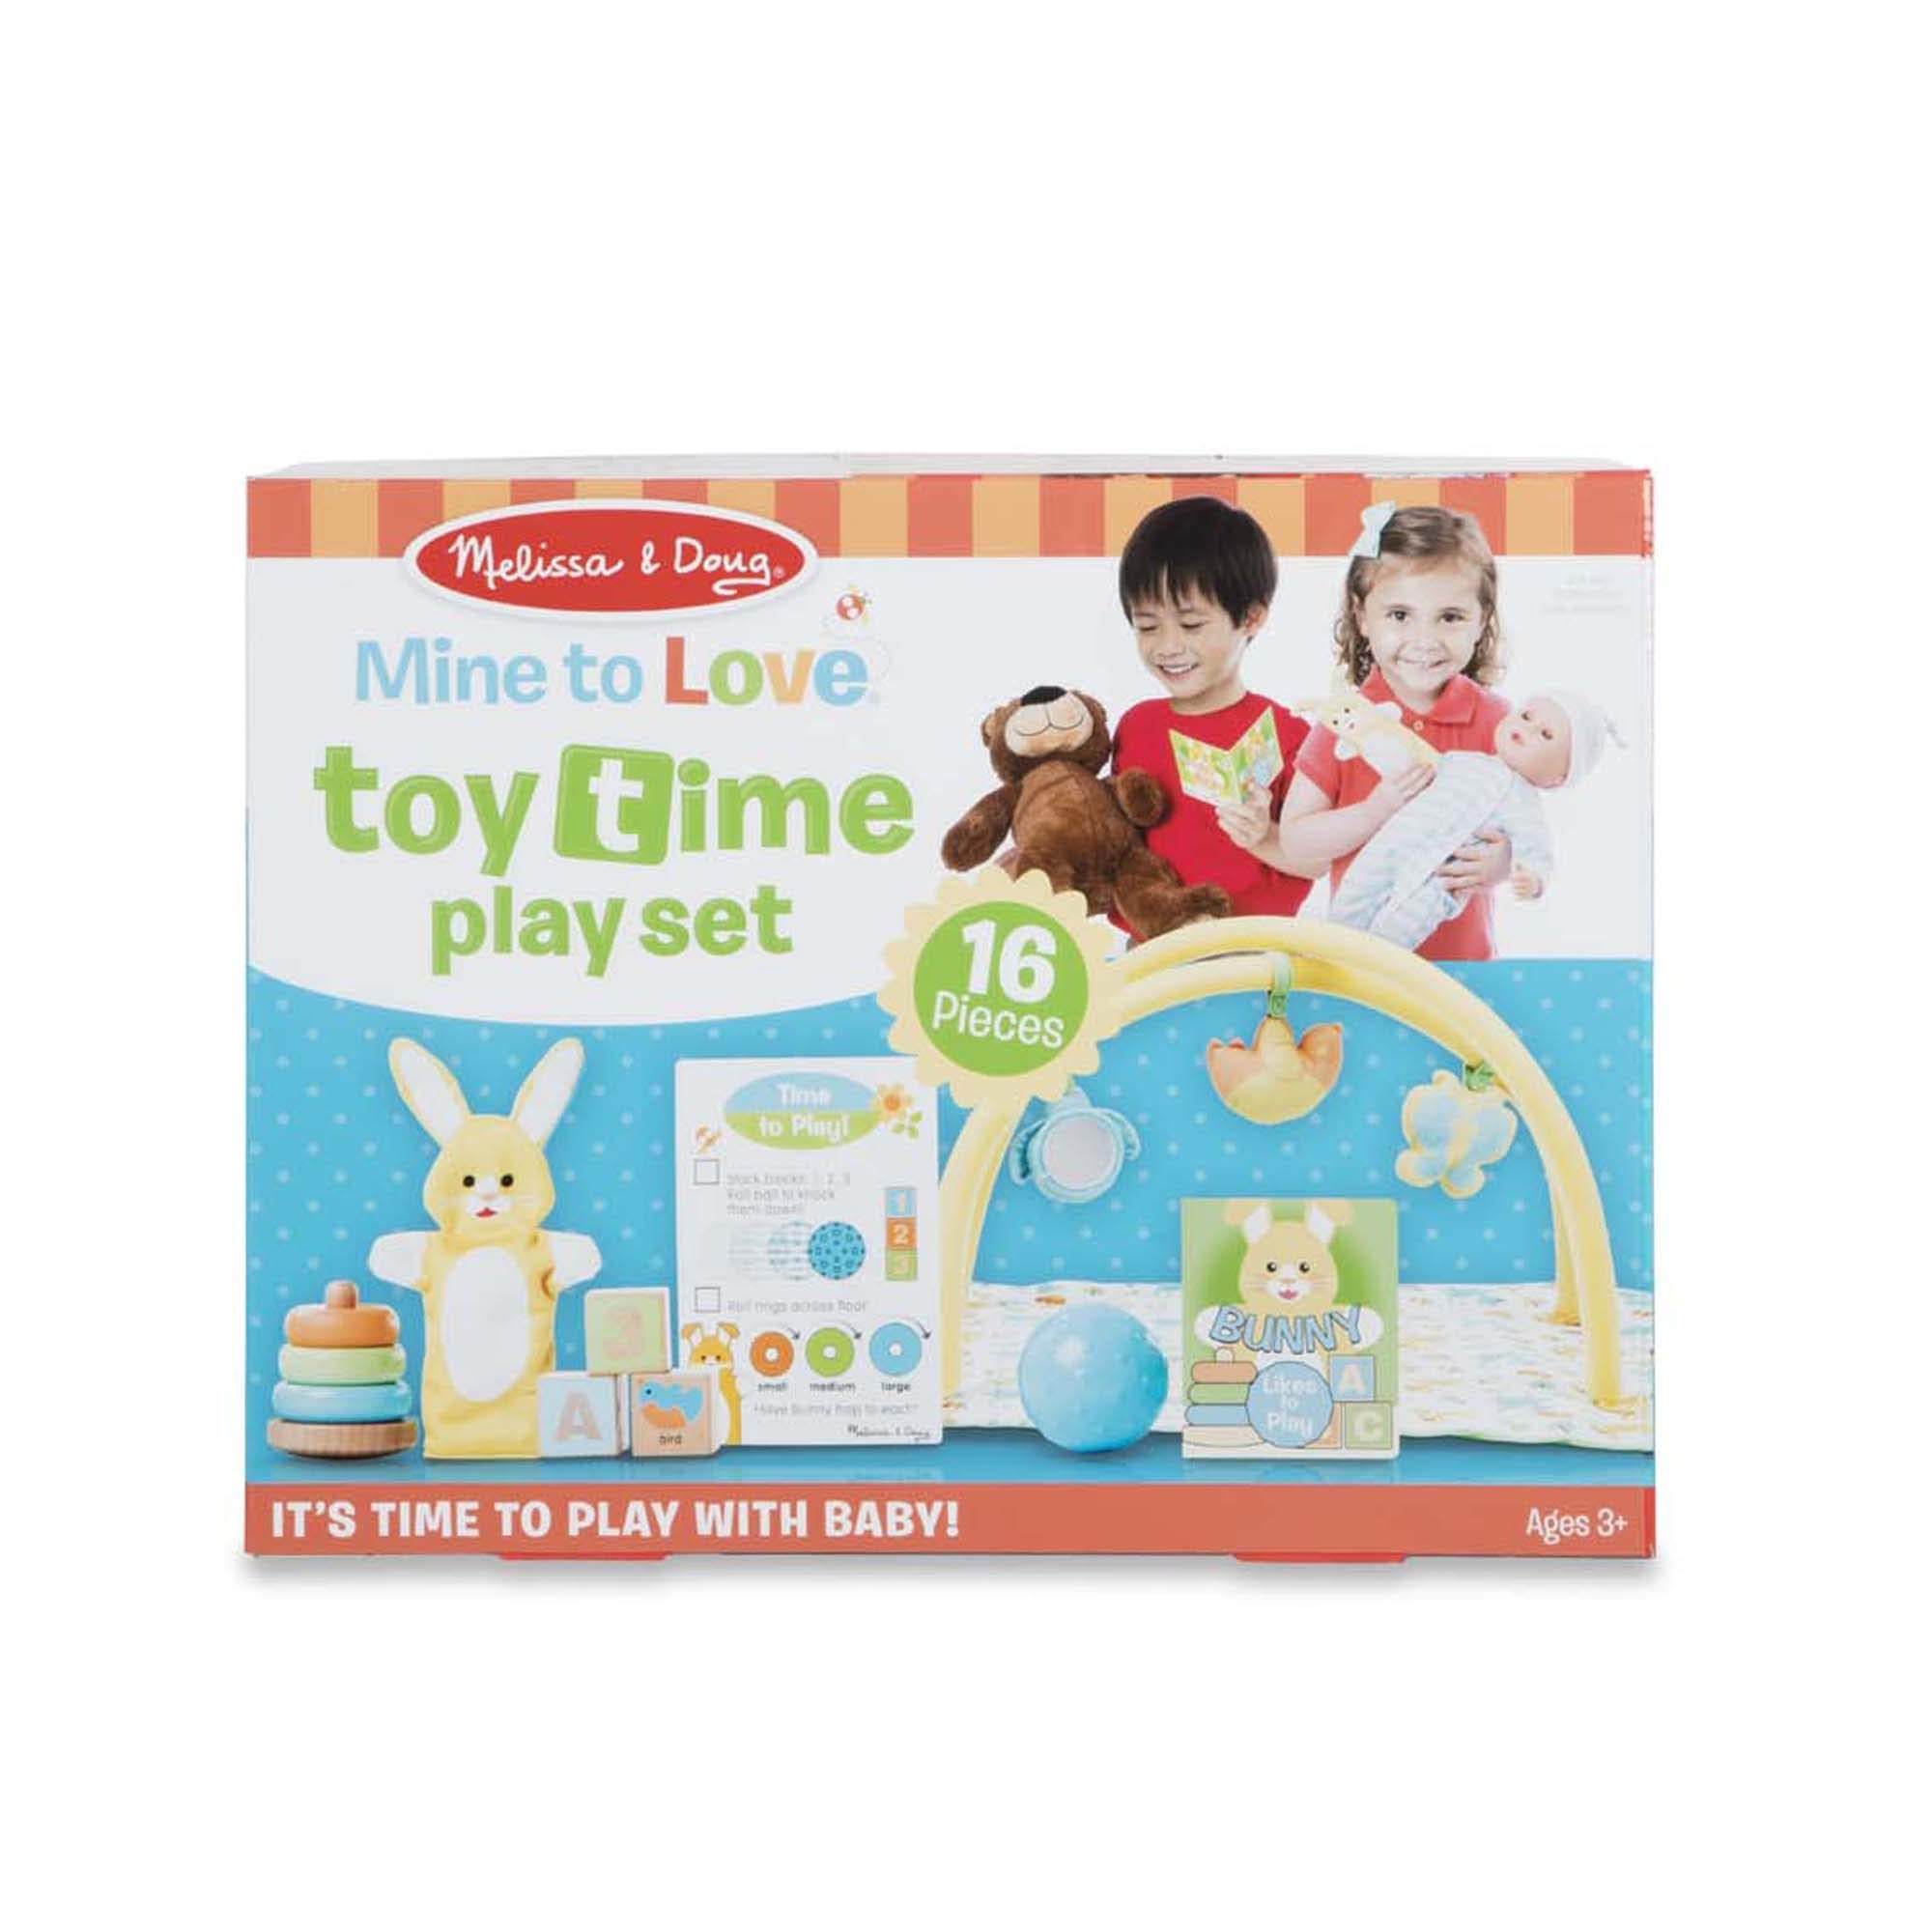 Melissa & Doug Mine to Love Toy Time Play Set